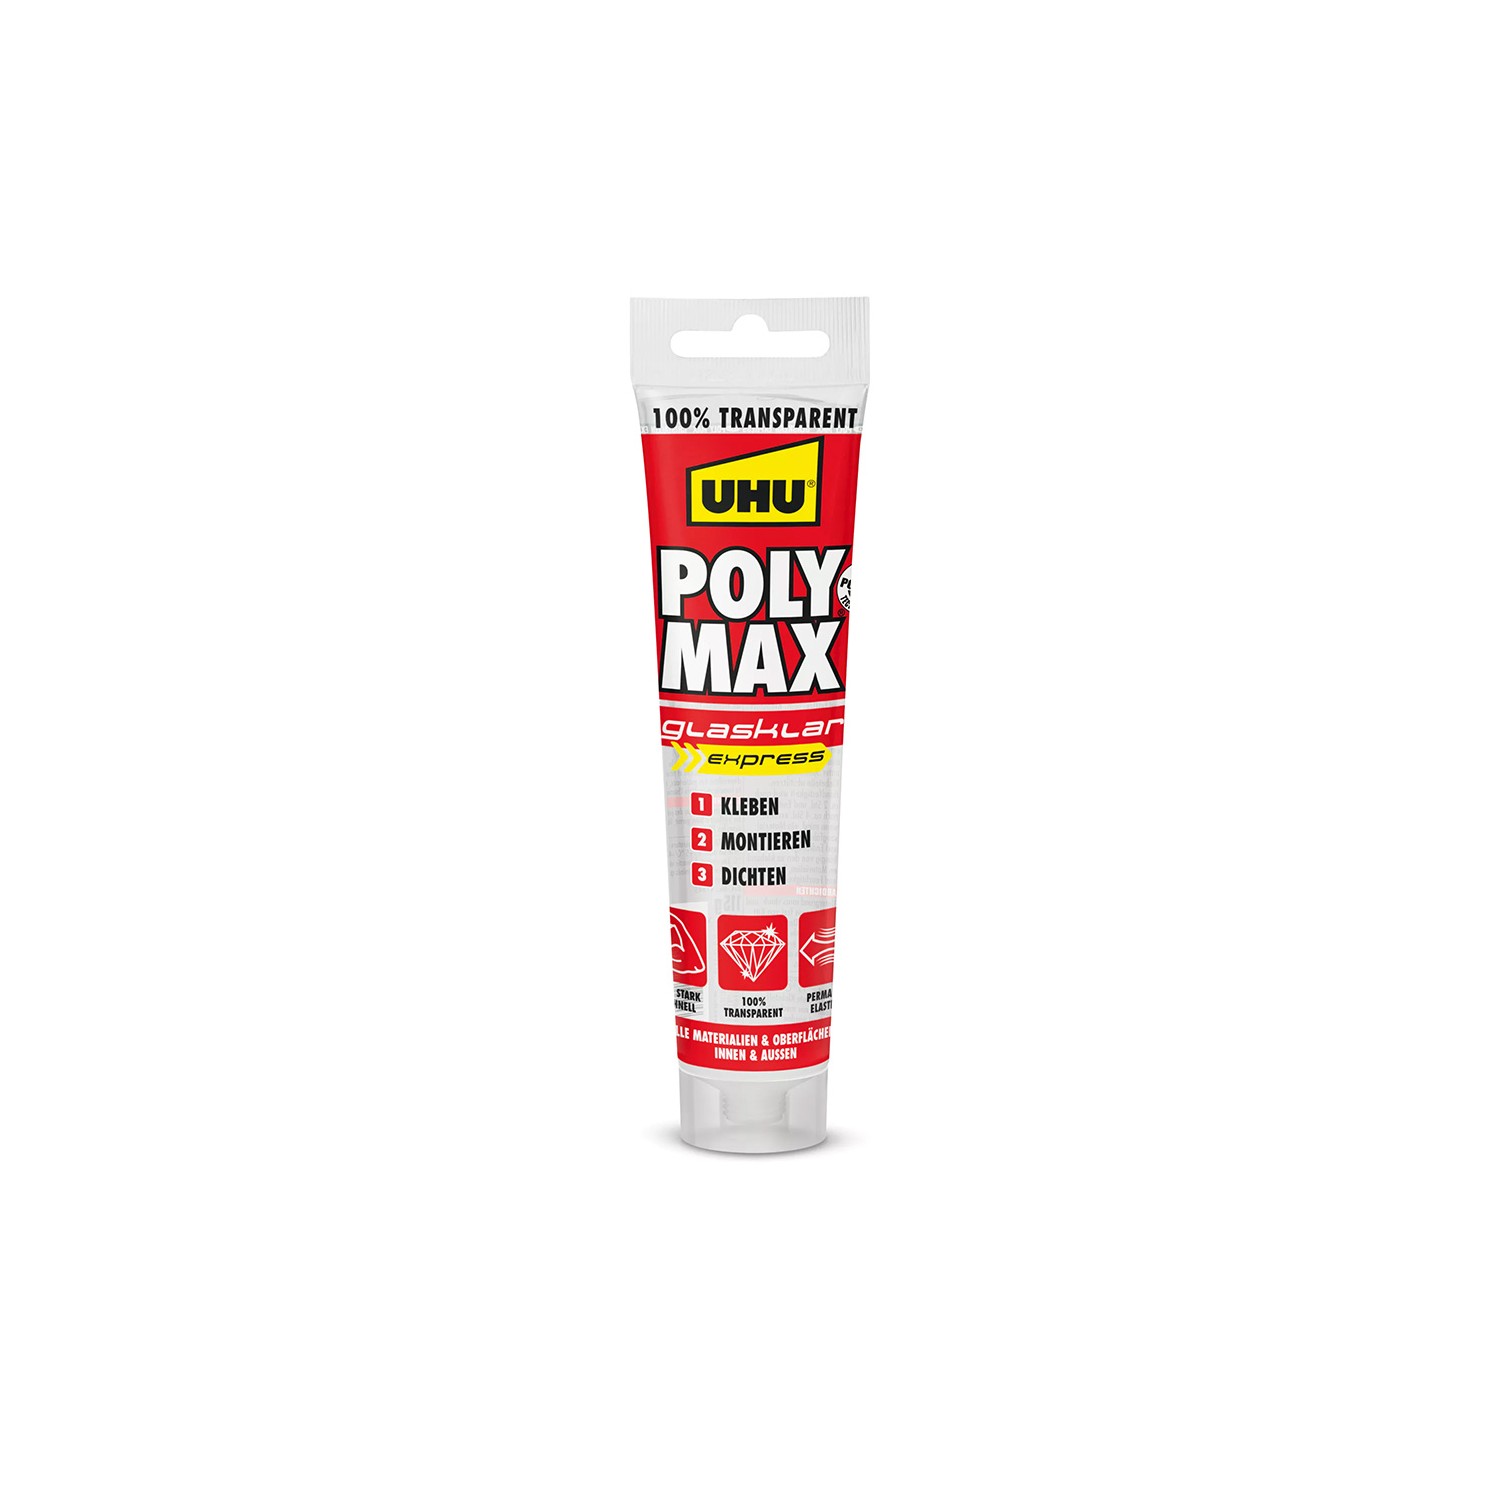 Uhu poly max® cristal express 115g ref. 6310615